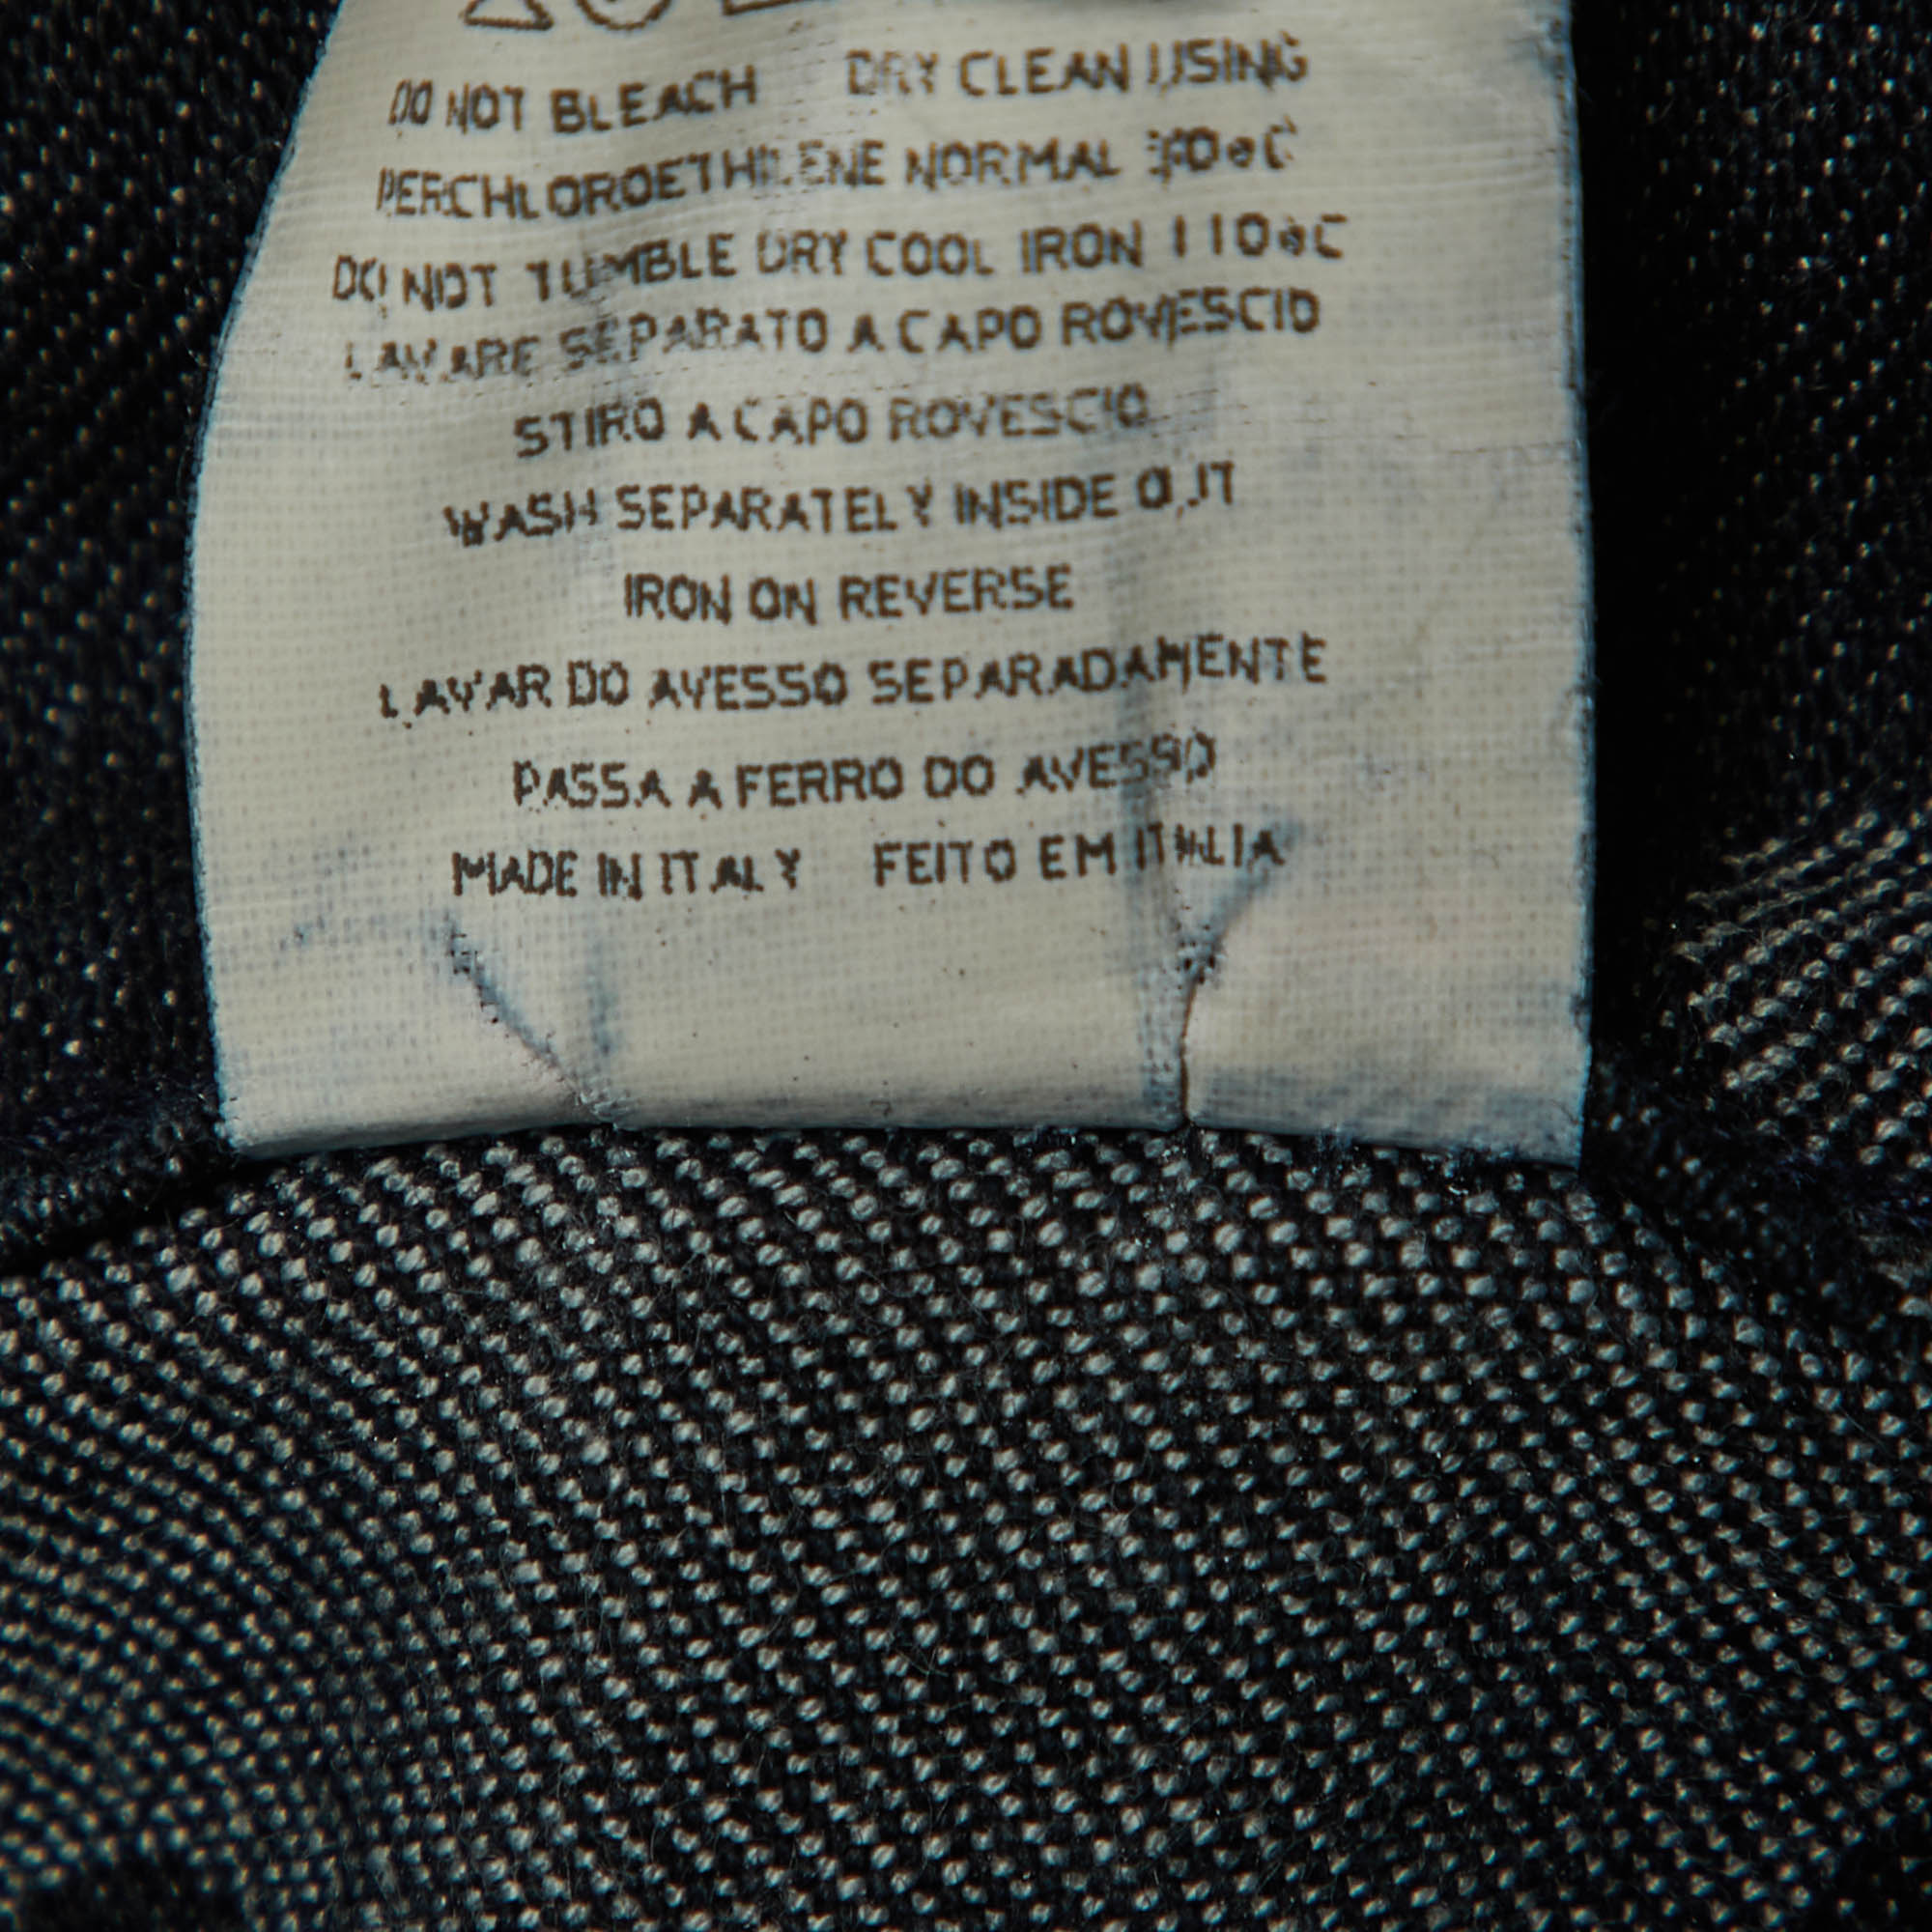 Moschino Jeans Dark Blue Hearts Patterned Denim Flared Jeans L Waist 28